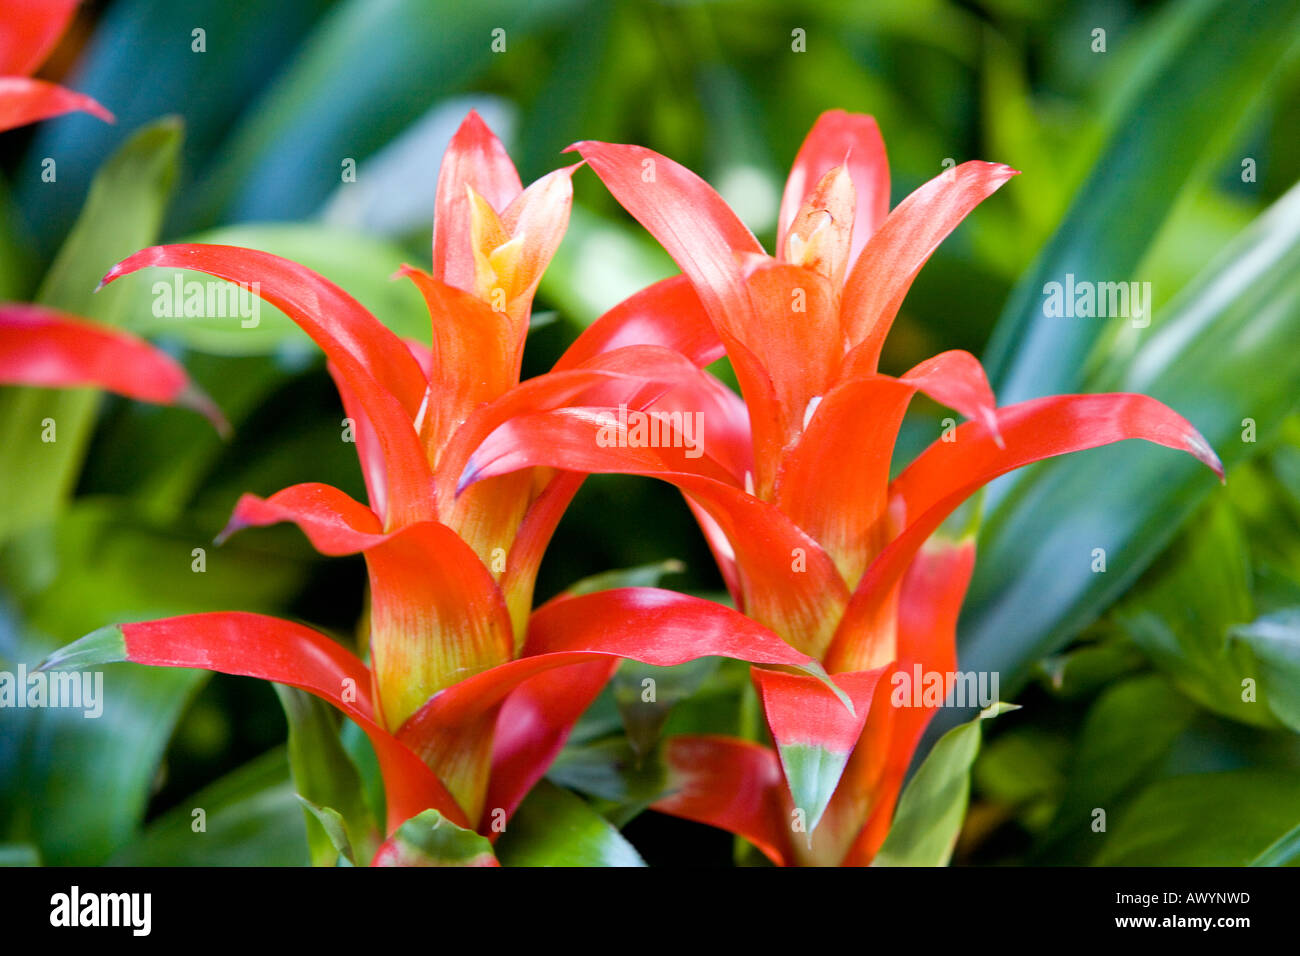 Guzmania flowers Stock Photo